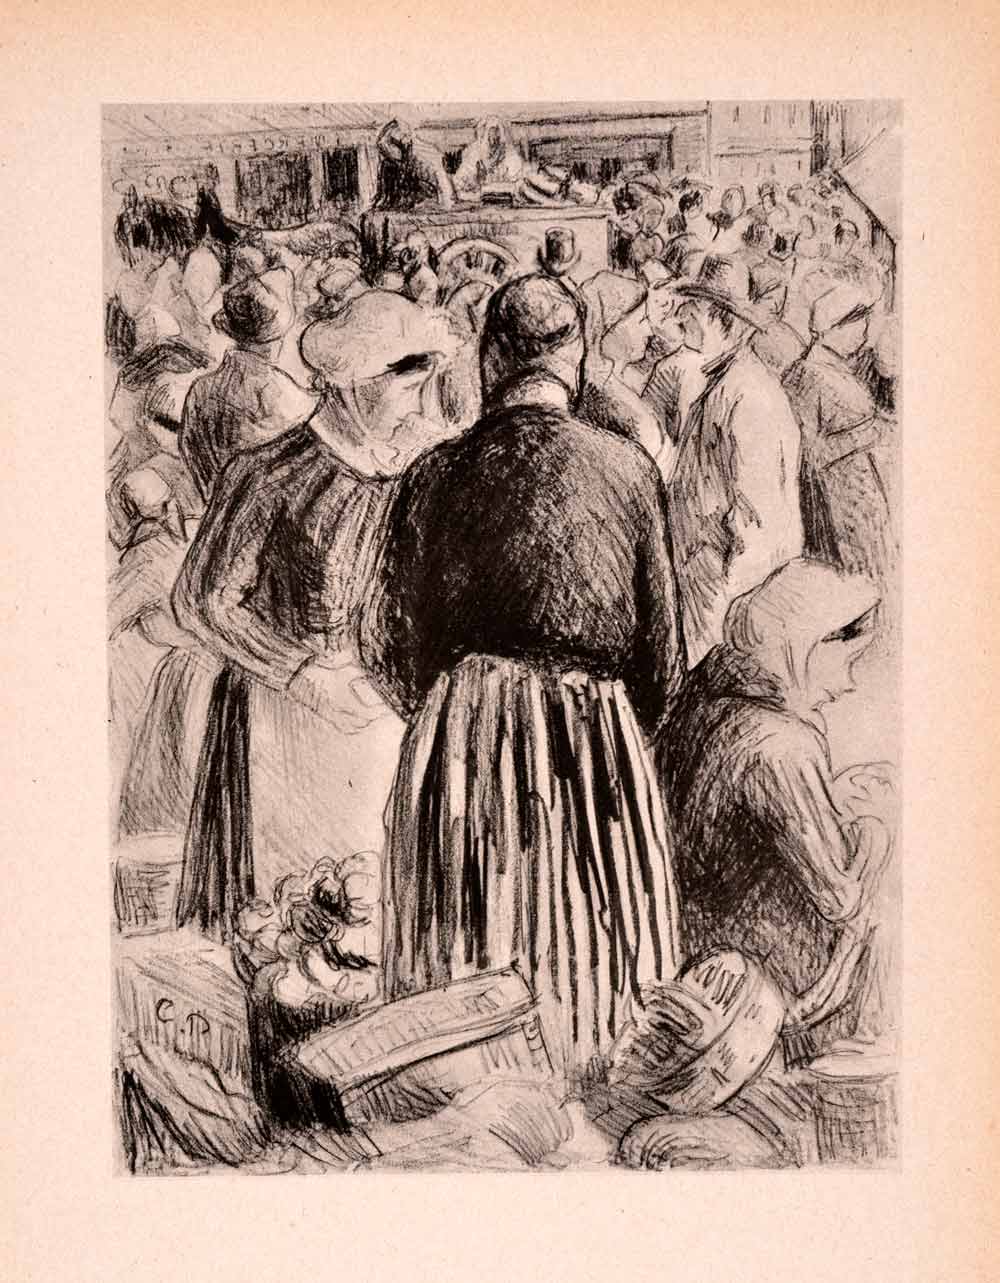 1946 Print Pissarro Market Pontoise France French Impressionism Crowd Art XAK1